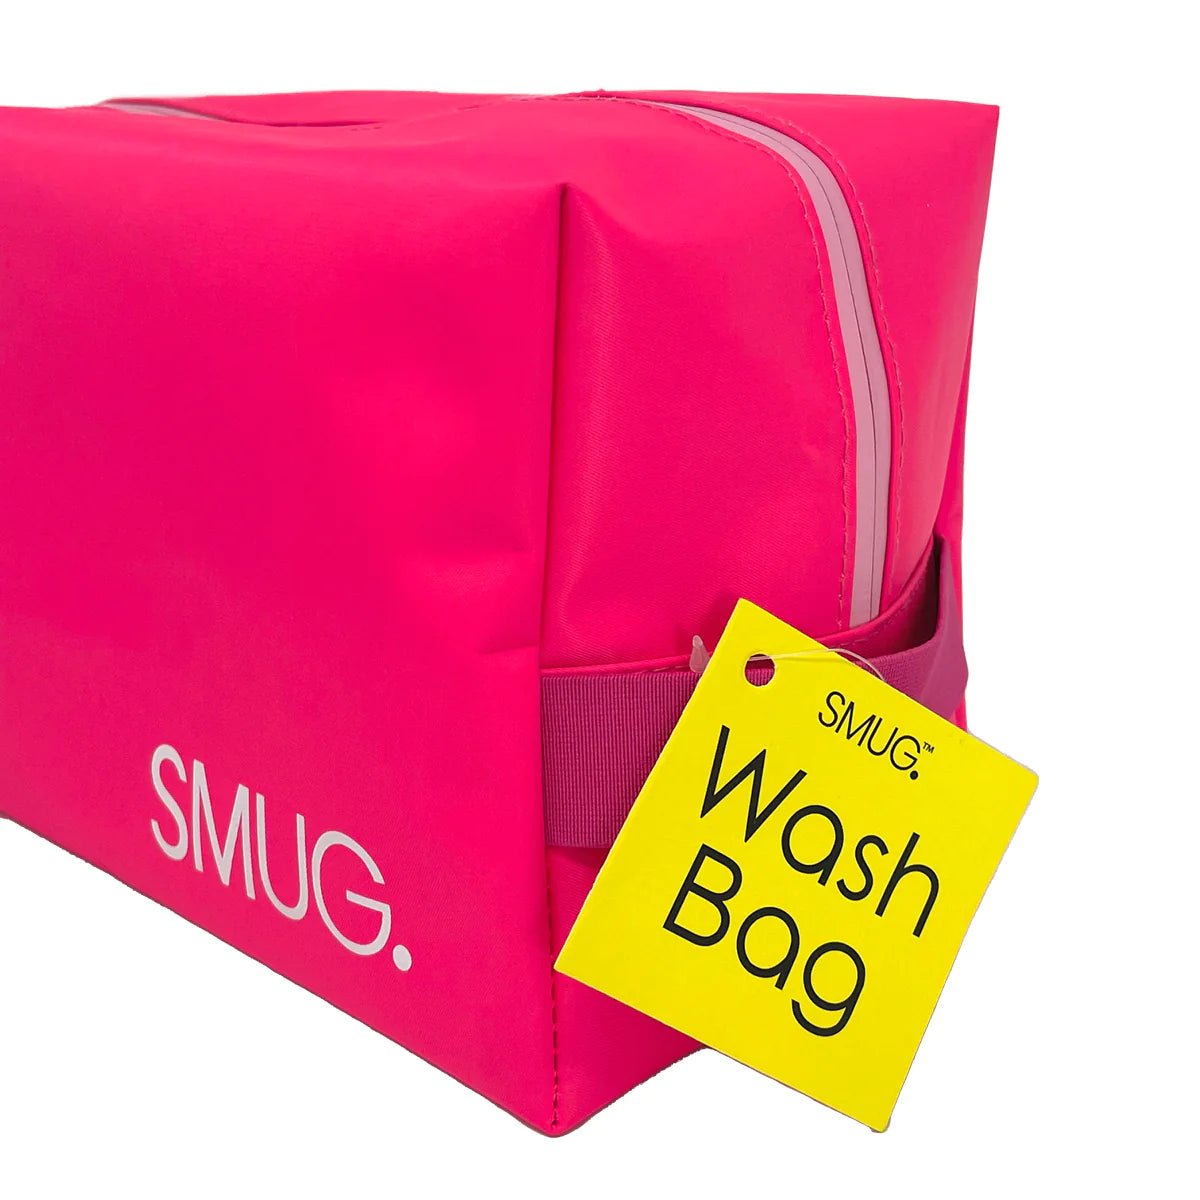 Smug Wash Bag - Bags & Accessories - British D'sire